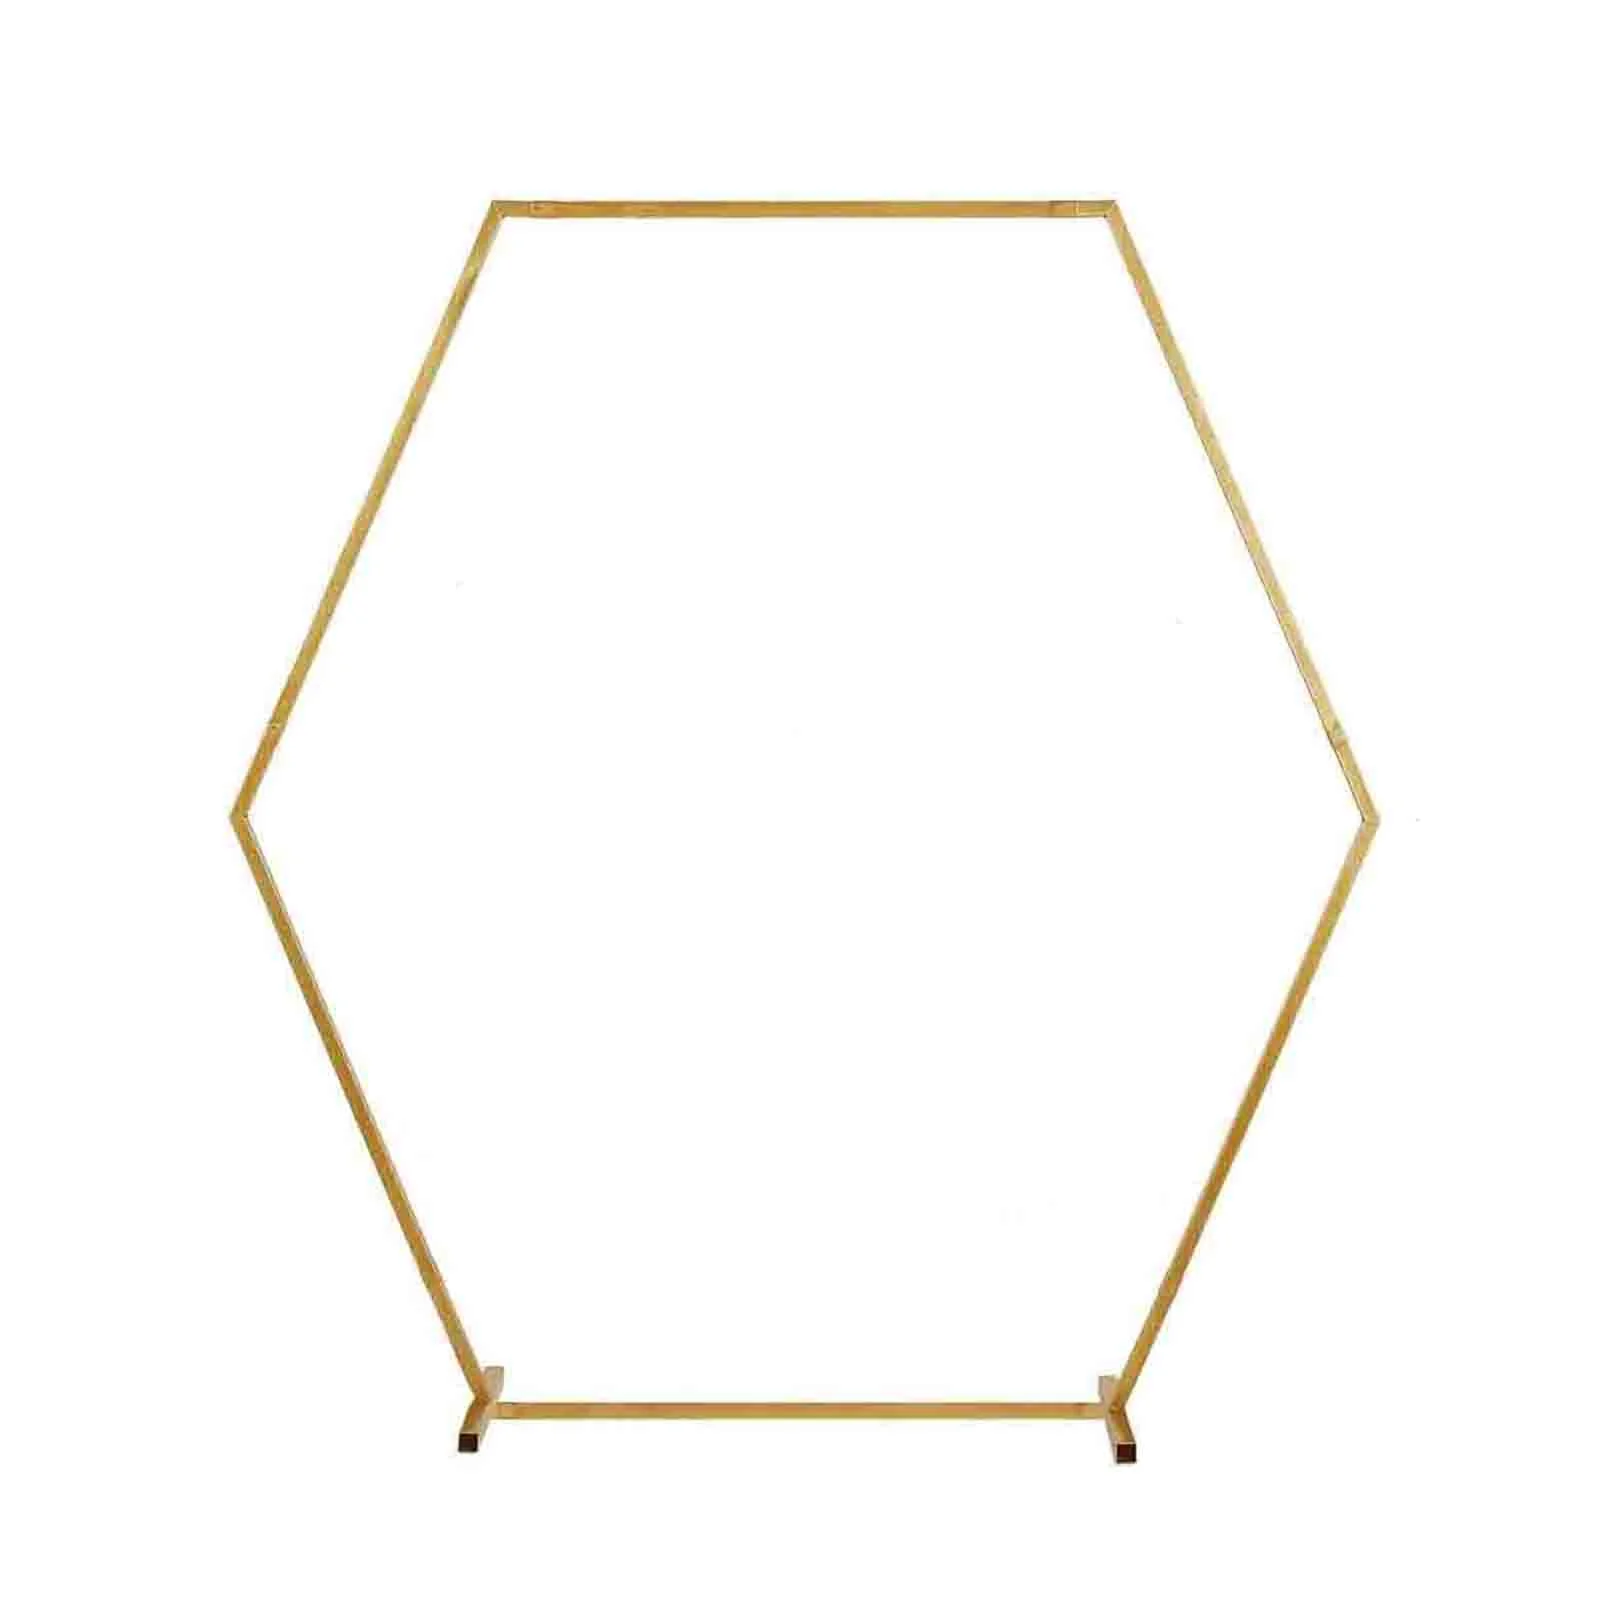 Gold Metal Hexagonal Wedding Arch Photo Backdrop Stand Rose Morning